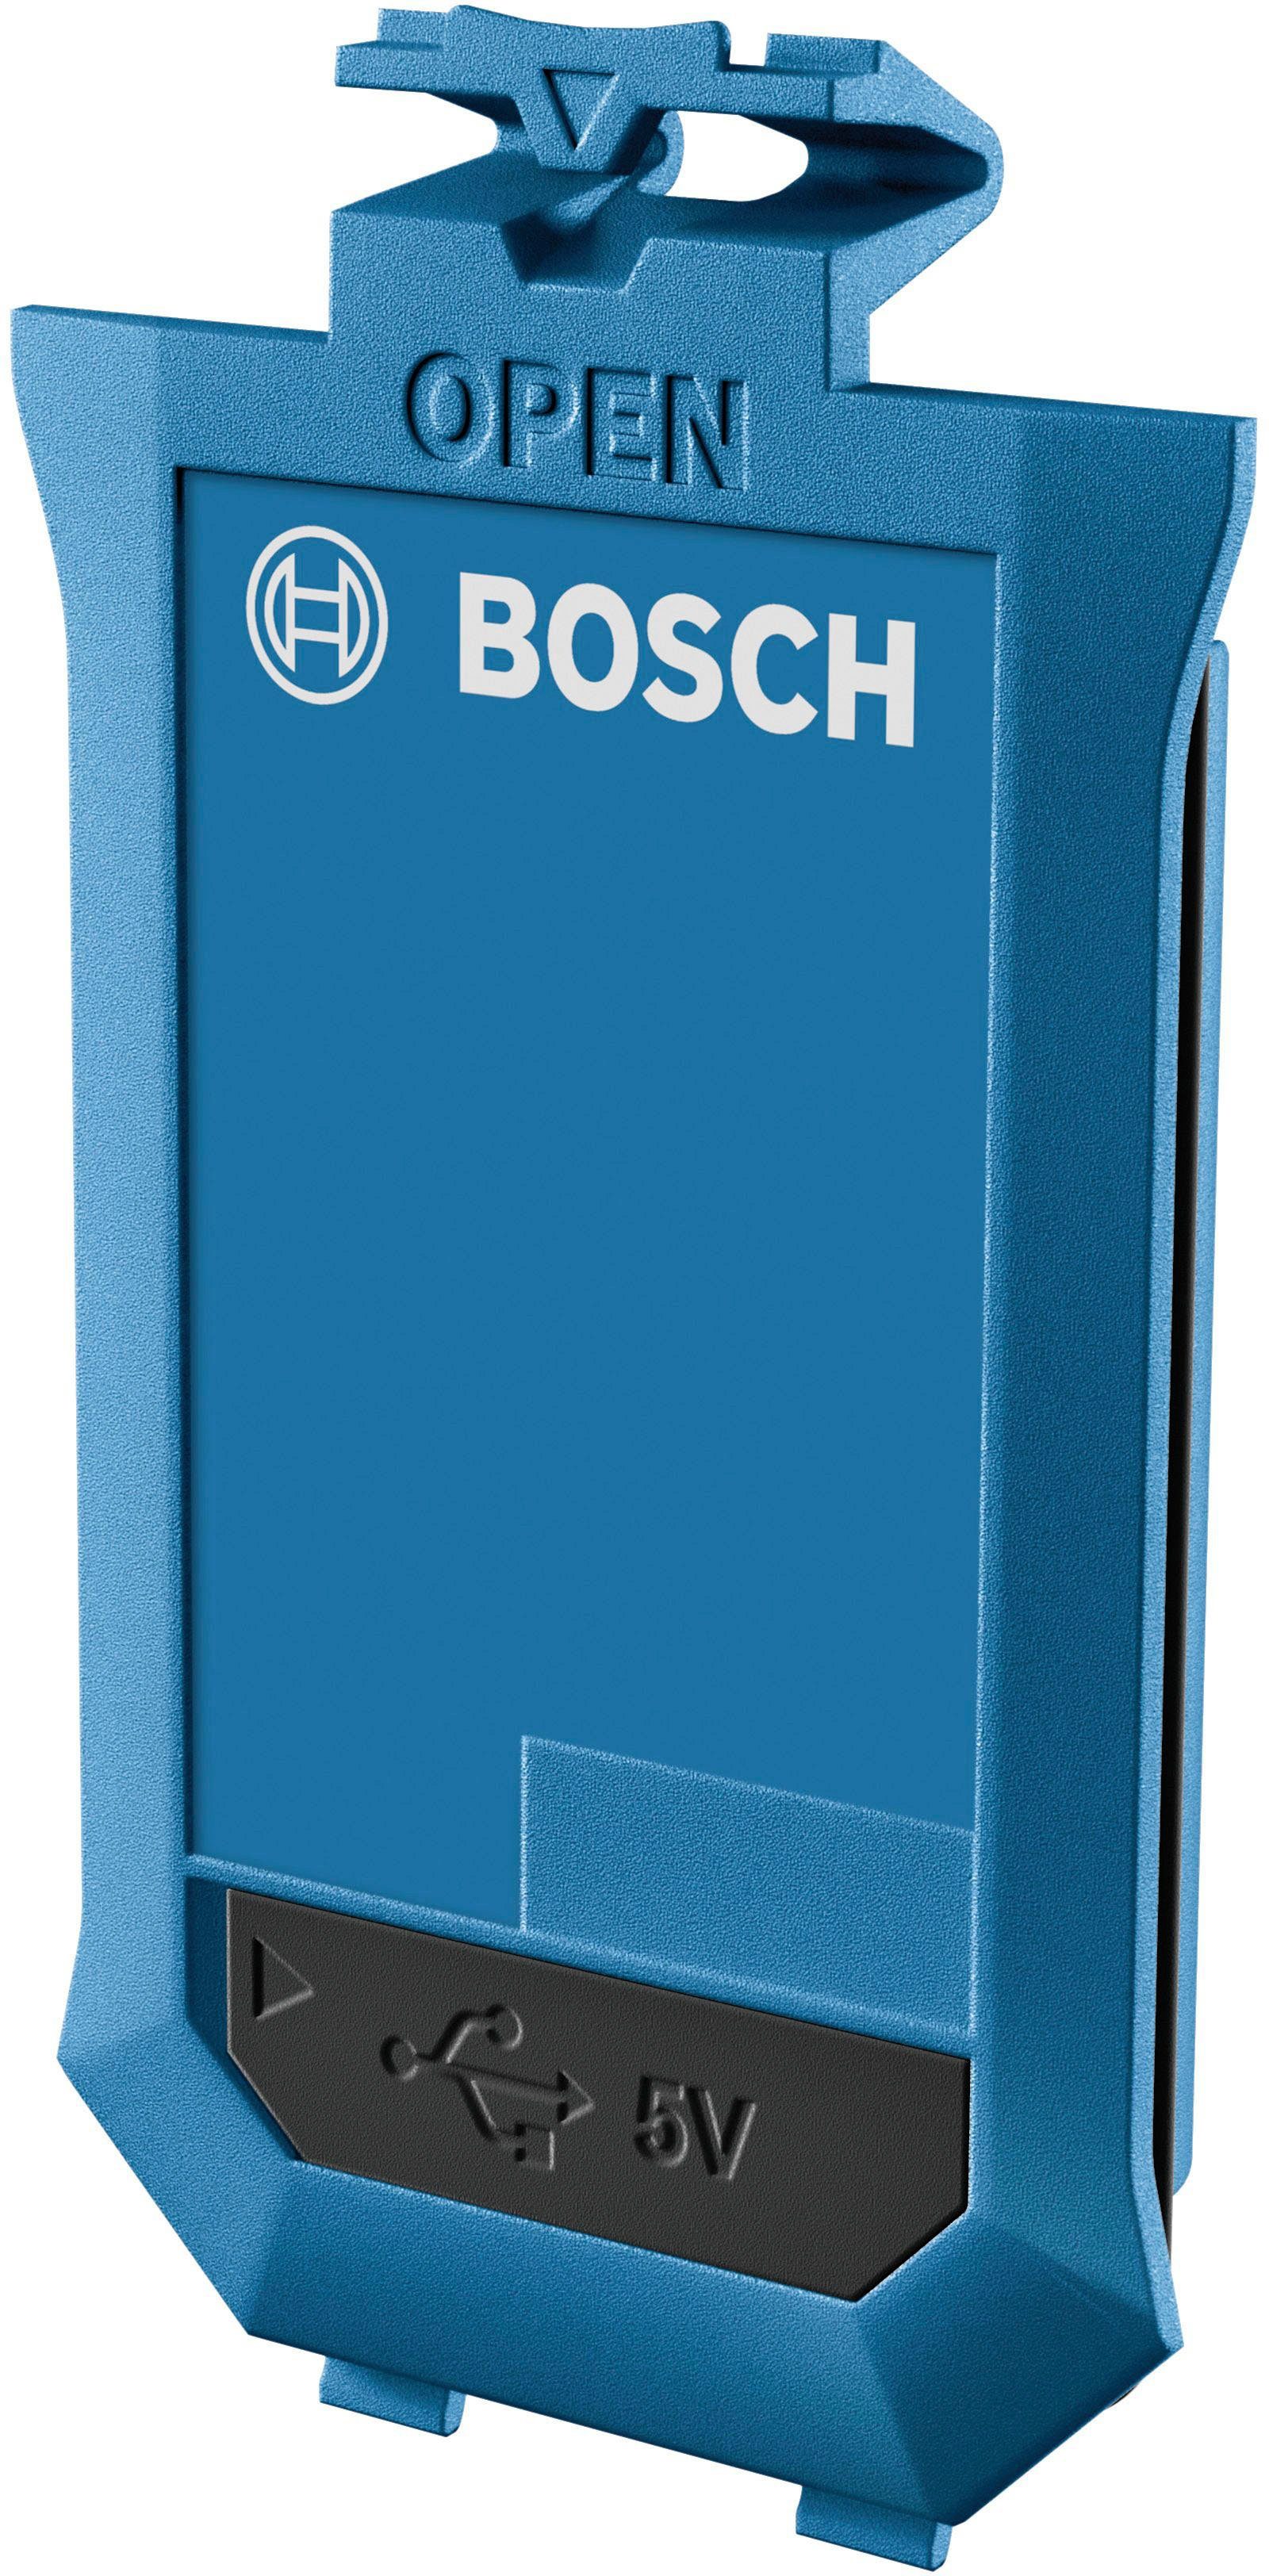 Bosch Professional BA 3.7V 1.0Ah Akku (1 St), Kompatibel mit BOSCH Laser-Entfernungsmessern